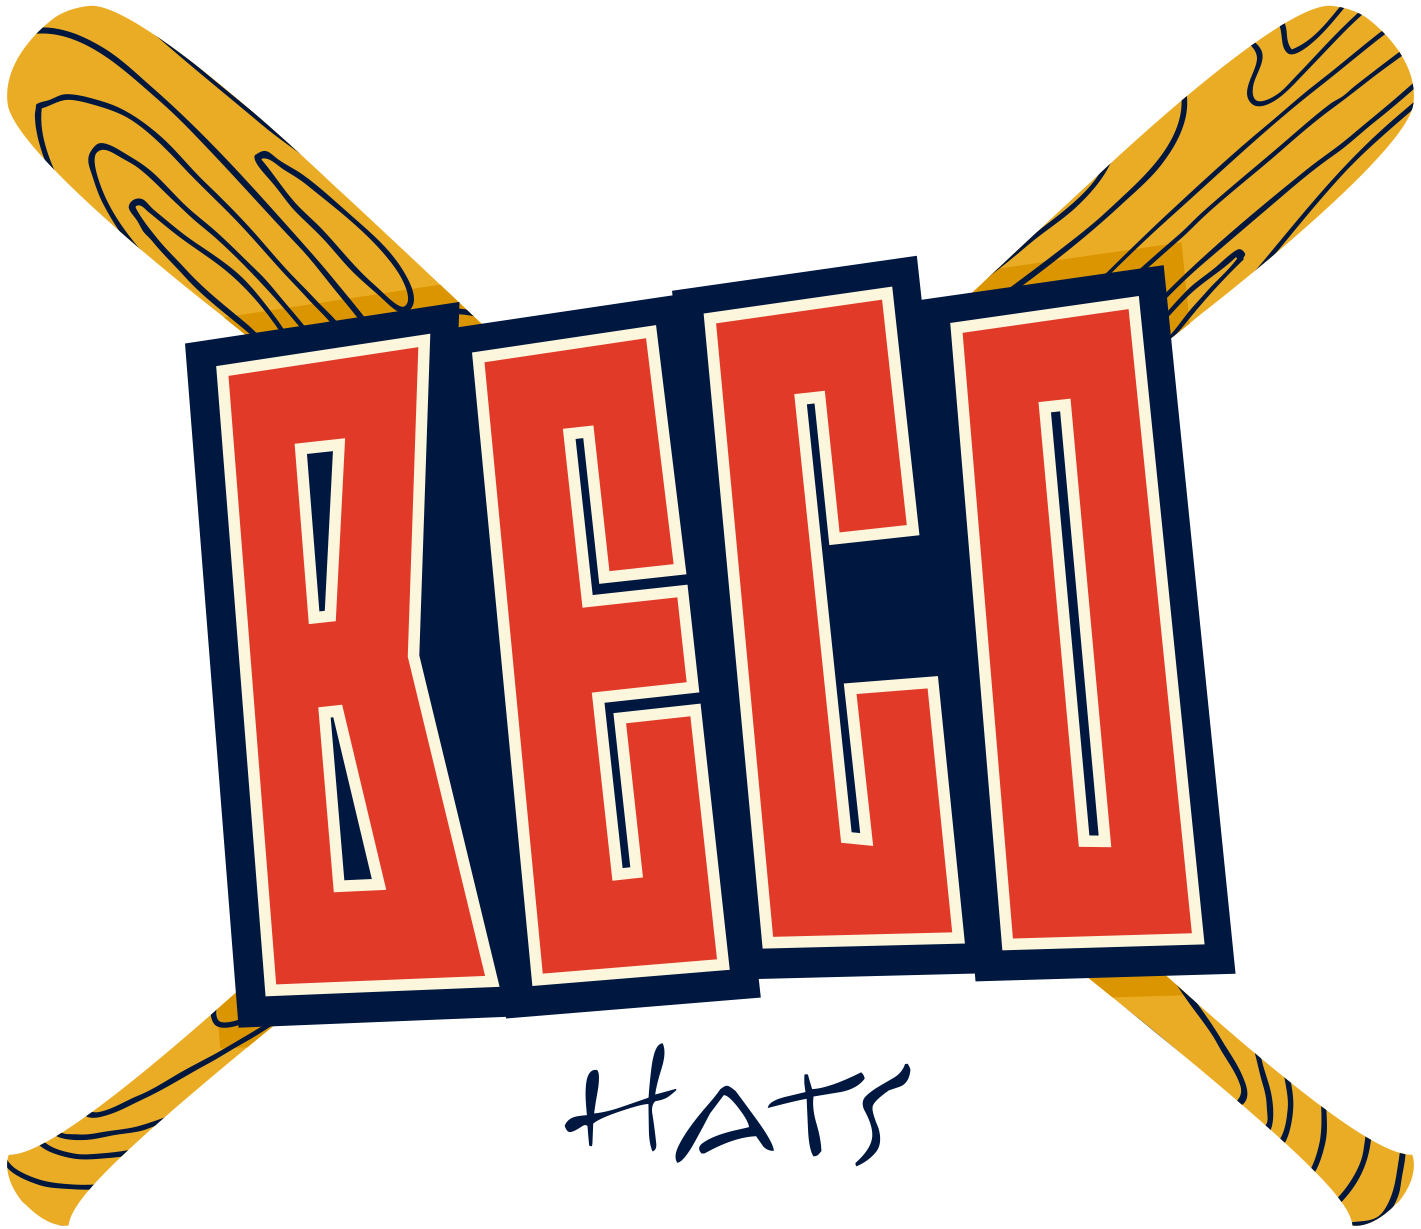 Beco - logotipo